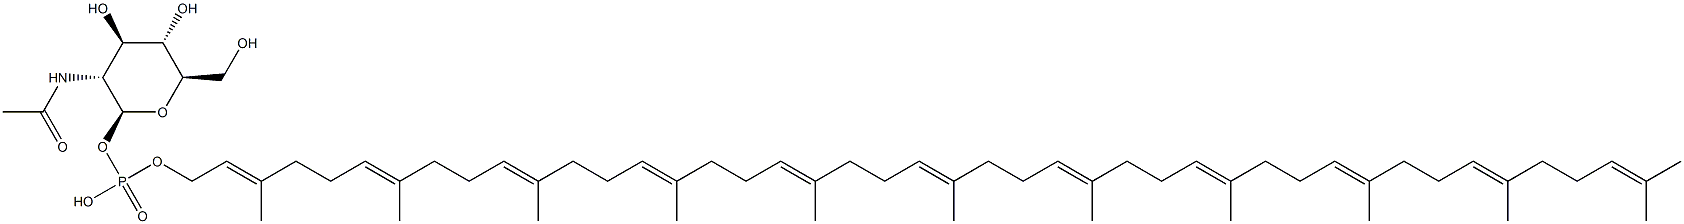 N-acetylglucosaminylphosphorylundecaprenol|